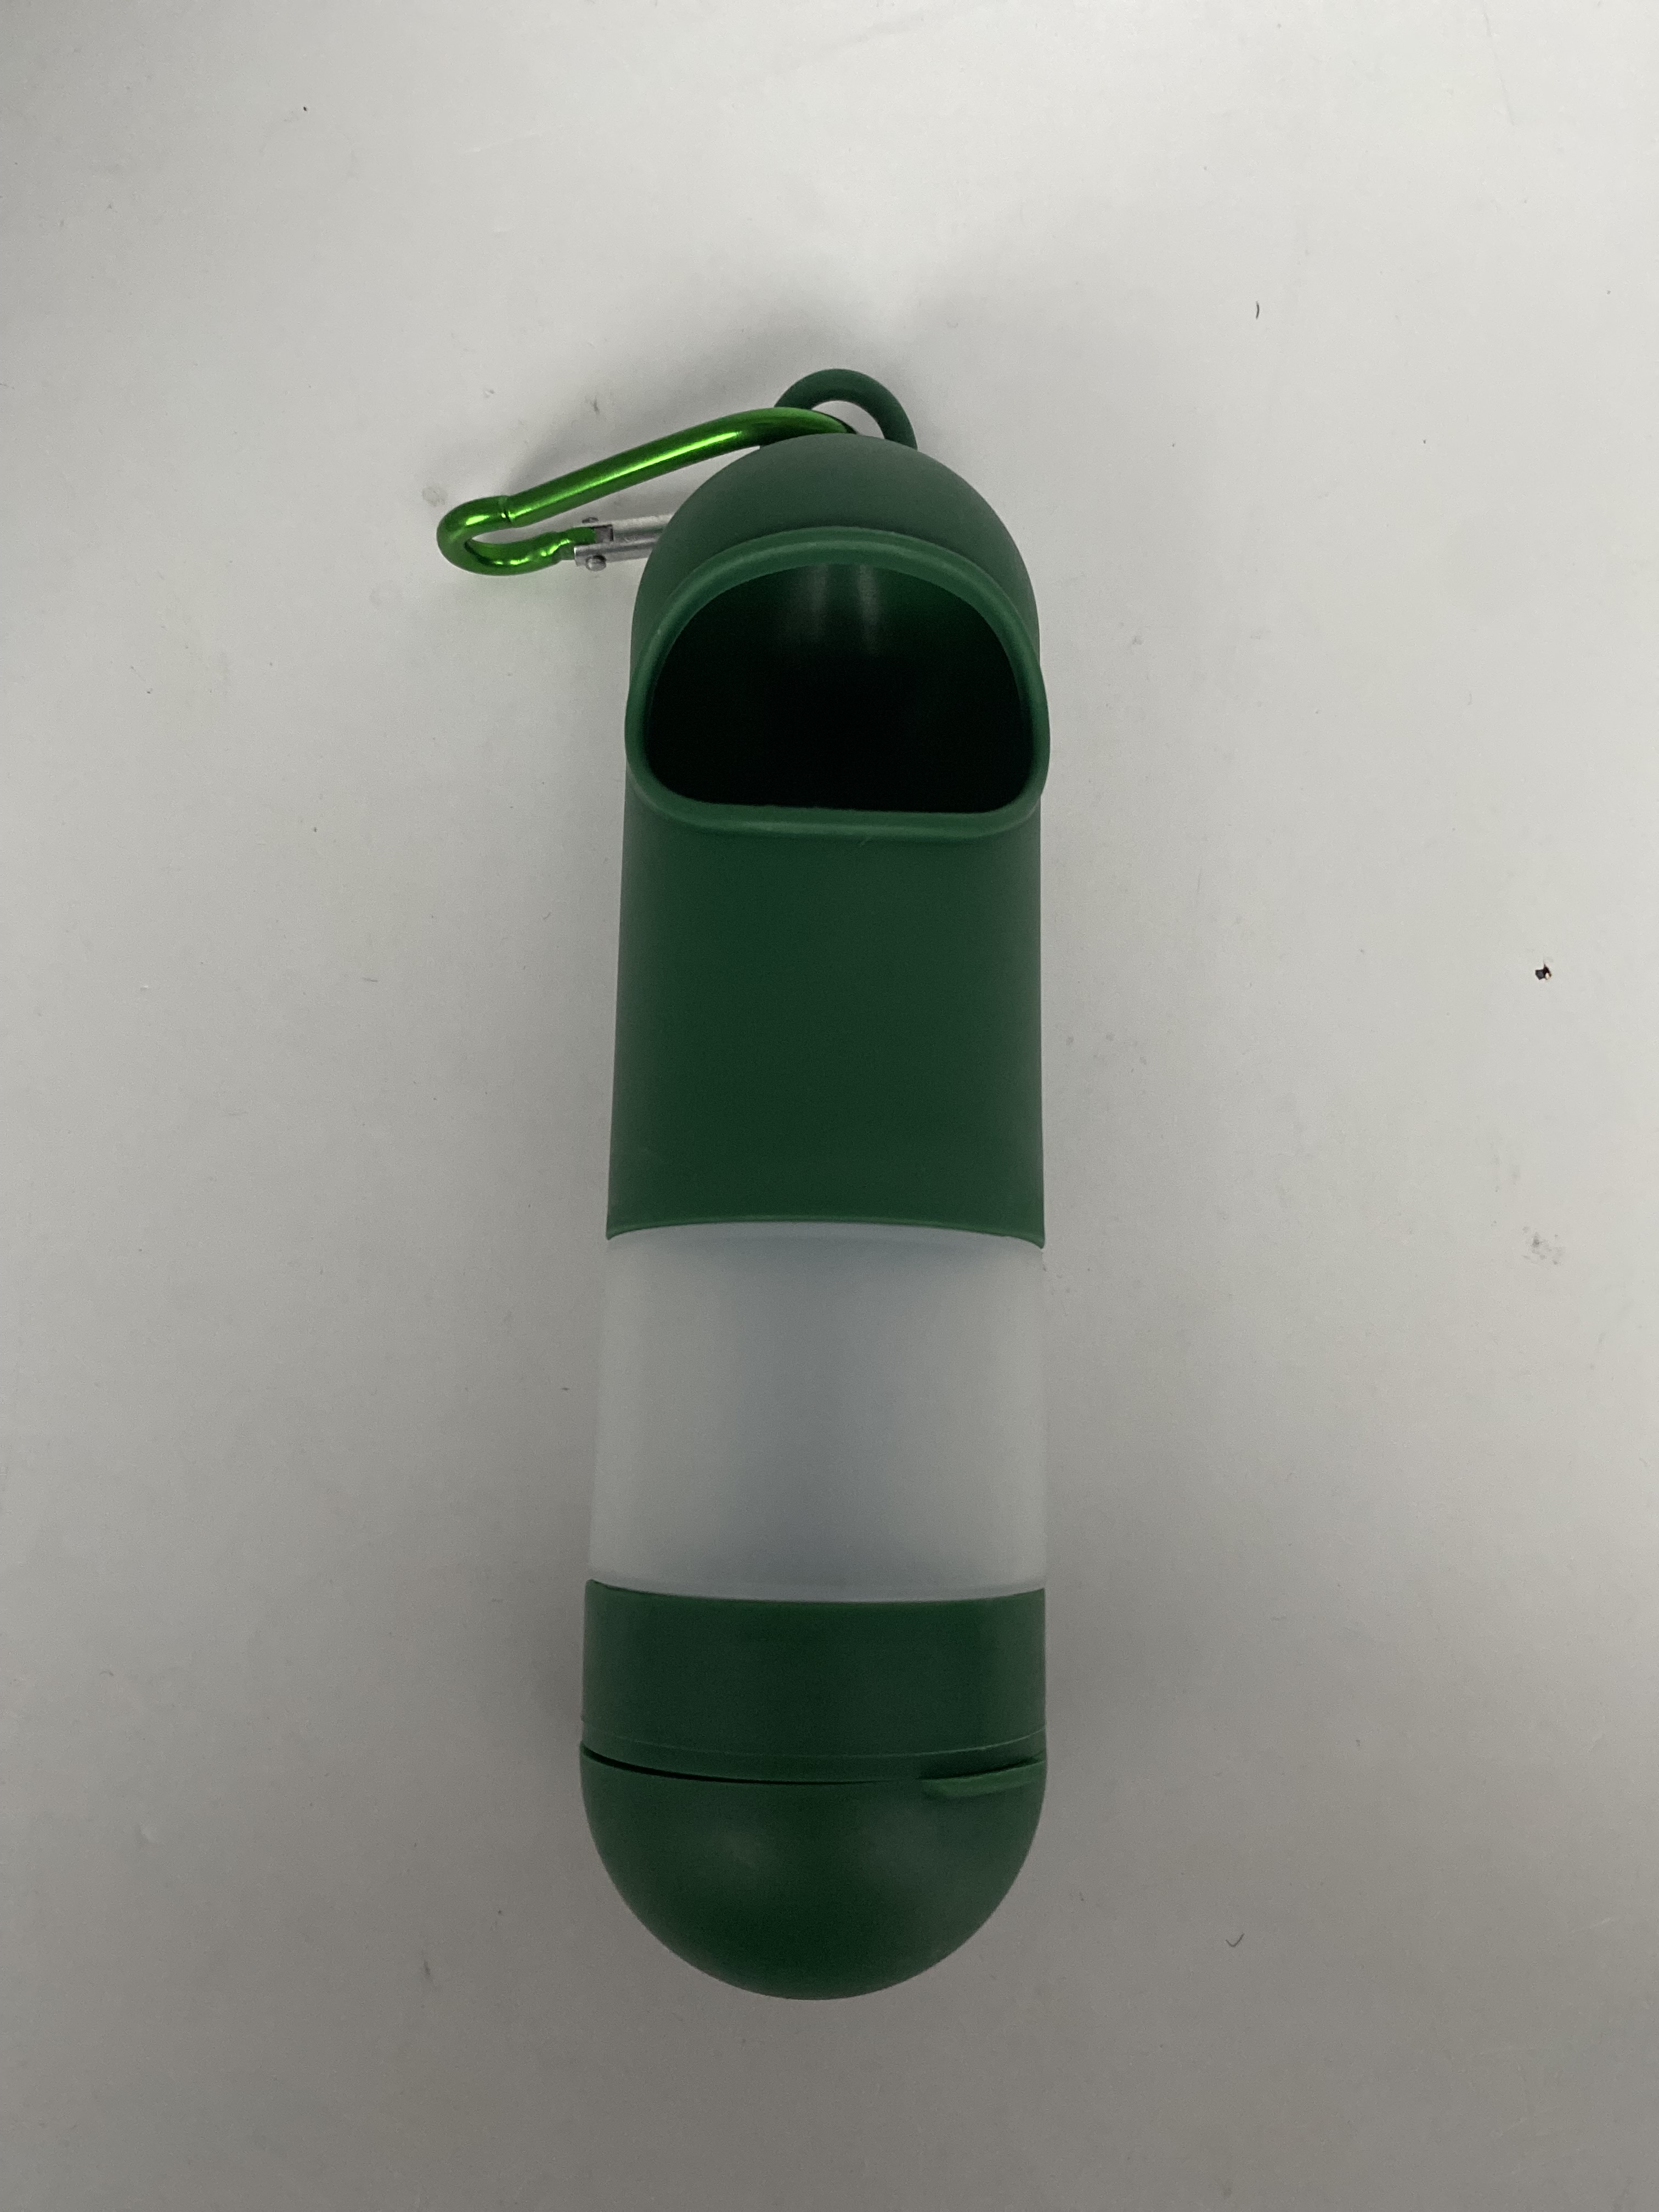 AG-2148 pet waste bag holder/dispenser